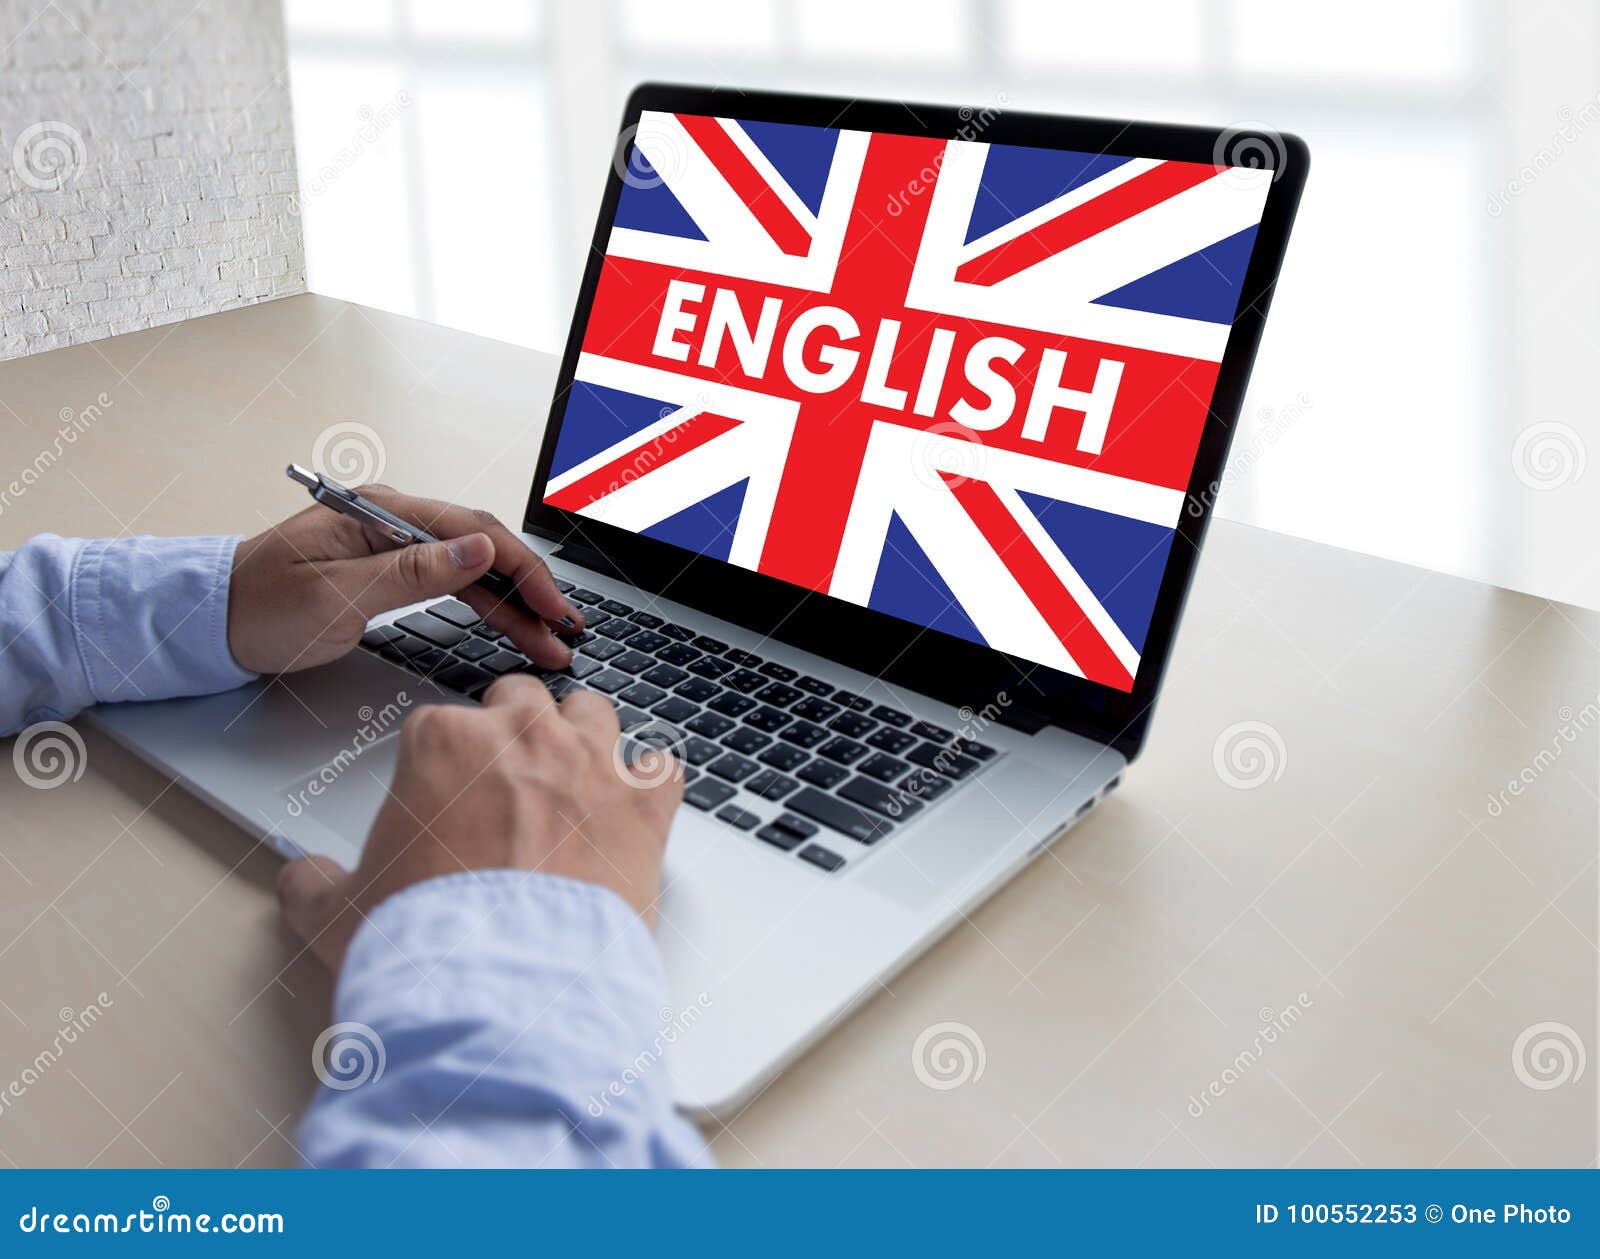 English forum. The English language. Speak English. Английский фото do you speak English. England language.